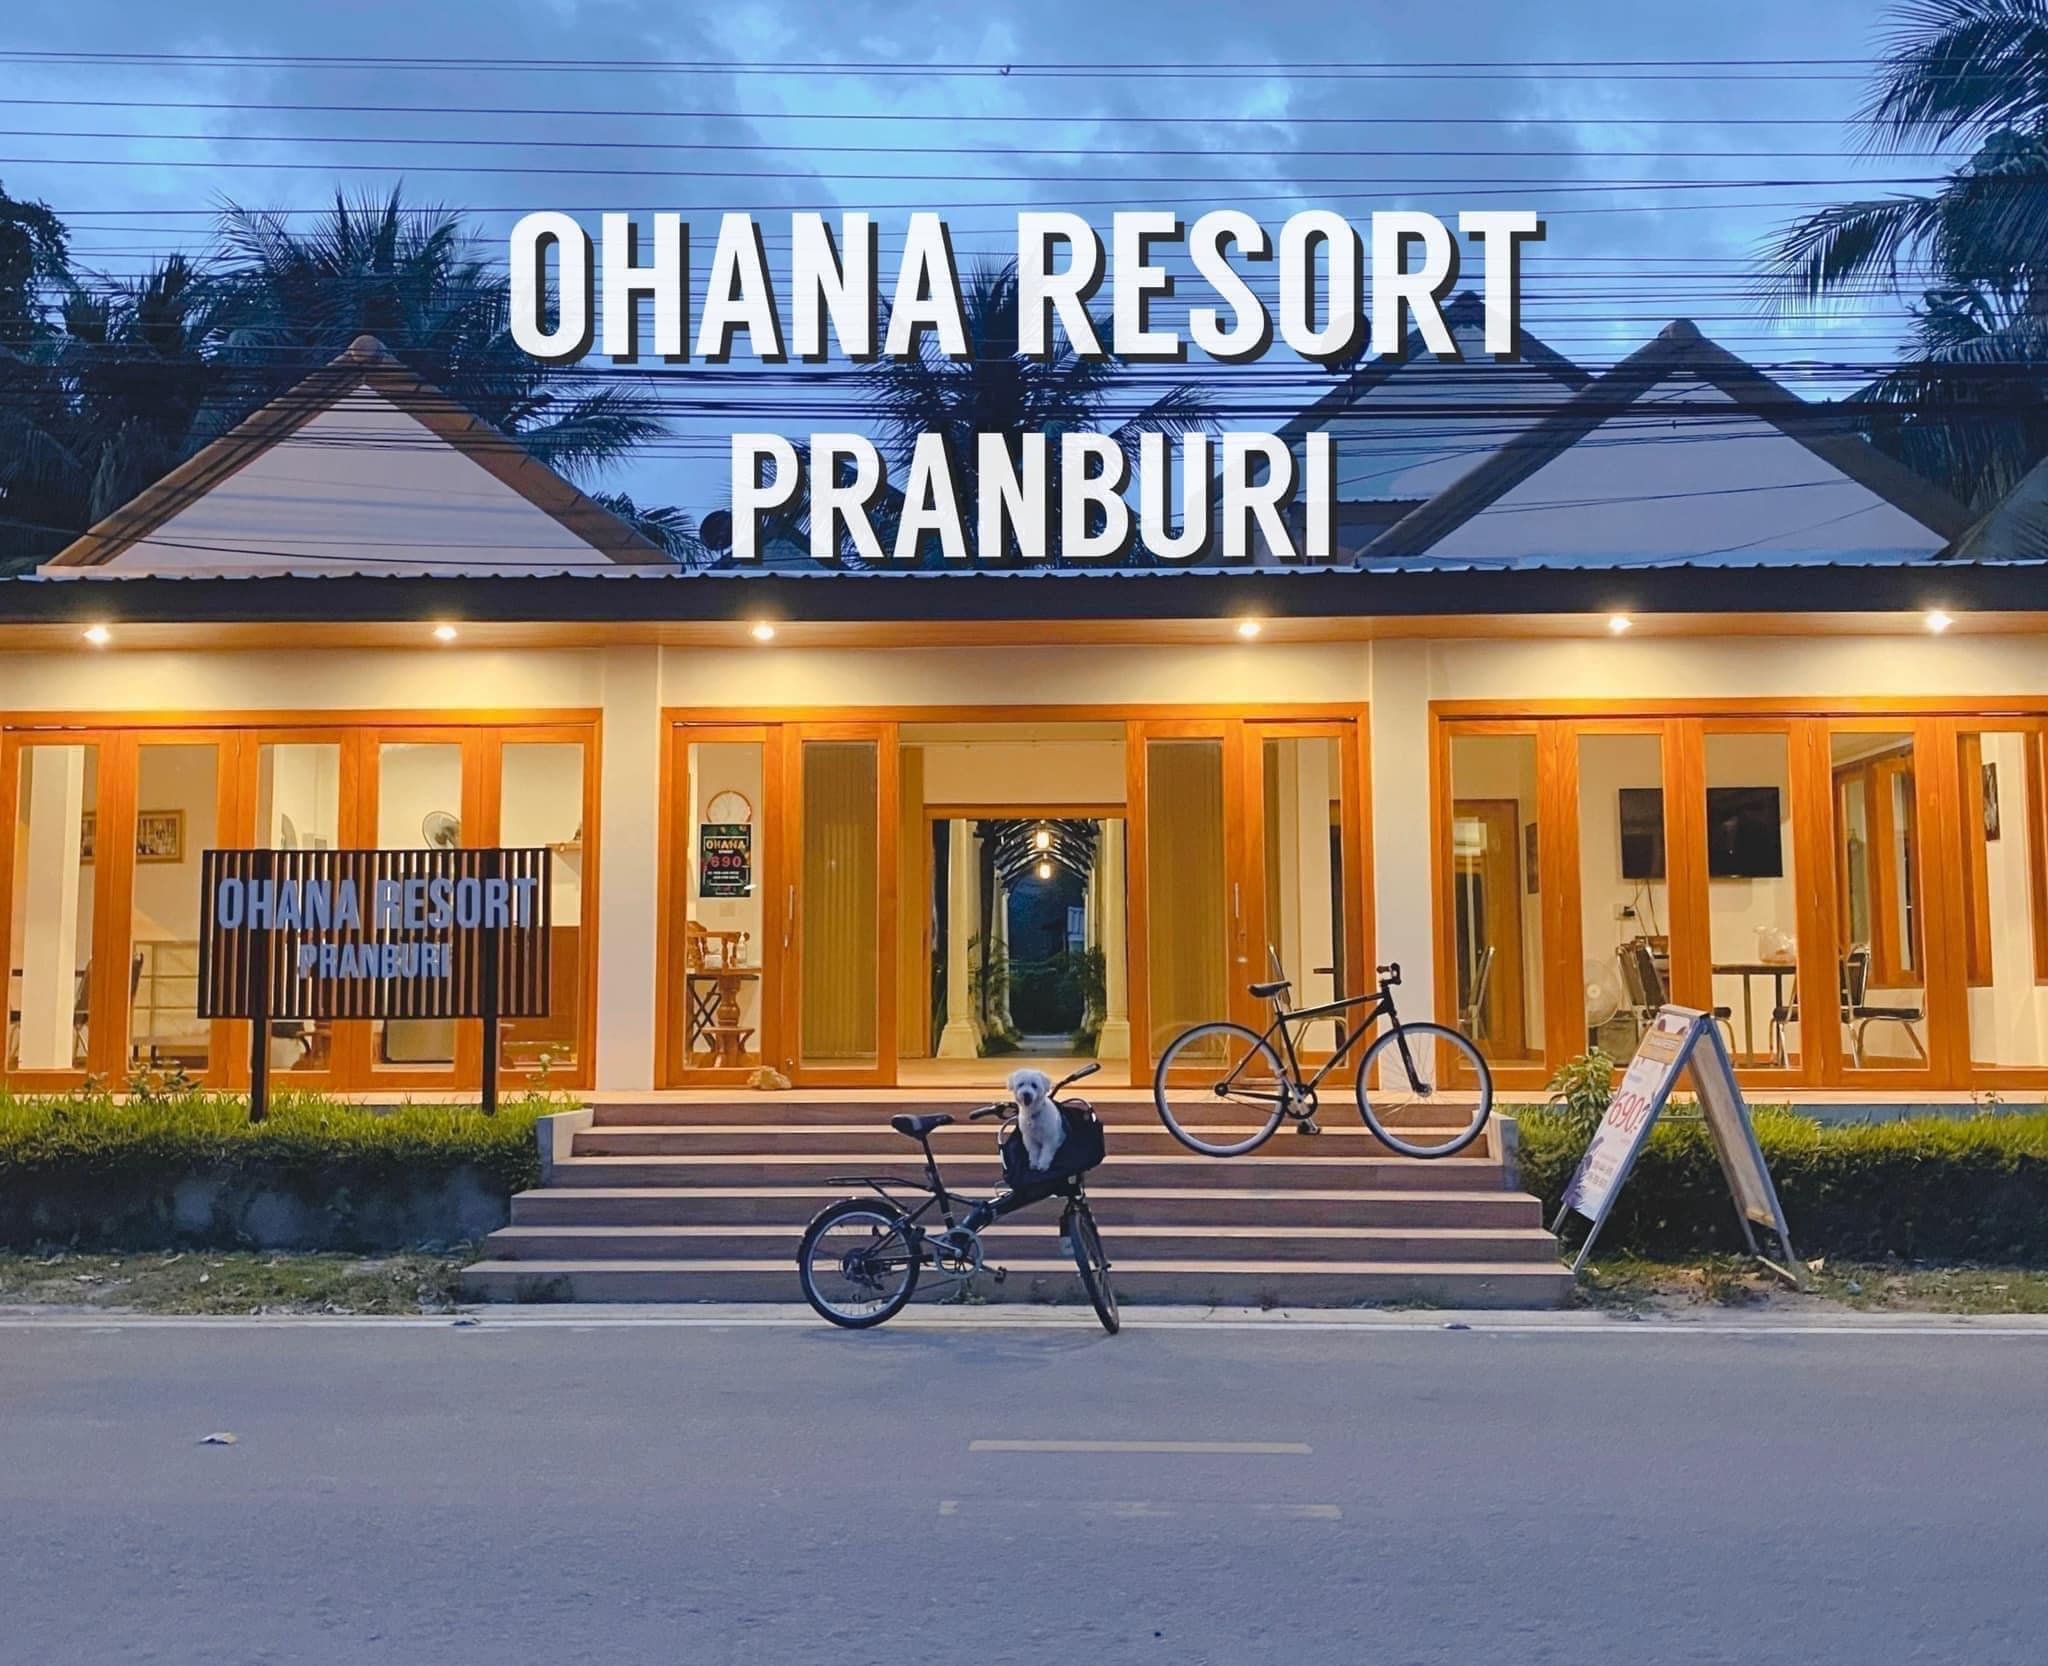 Ohana Resort Pranburi  ที่พักปราณบุรีสัตว์เลี้ยงเข้าพักได้ ราคาหลักร้อย สไตส์มินิมอล สวยเกร๋มากๆ